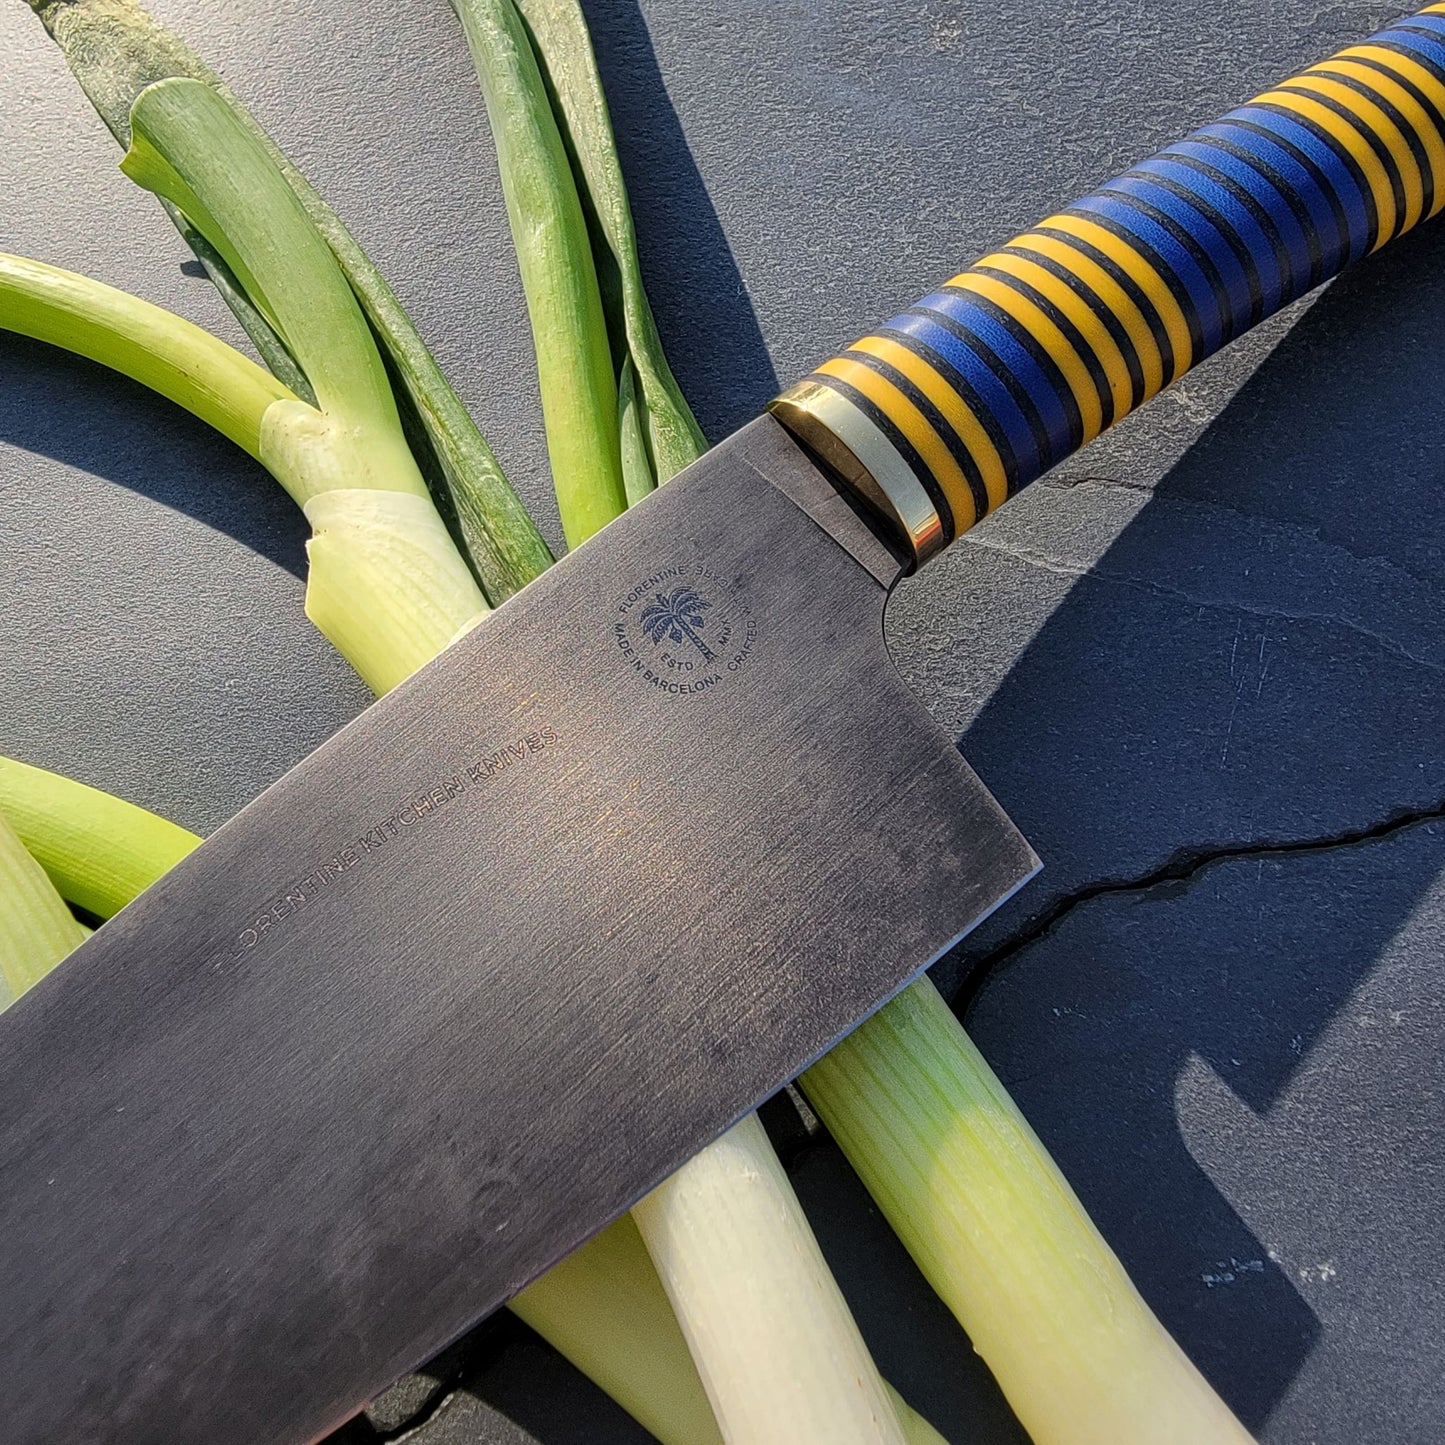 Chef's Knife "Sweet Swede"